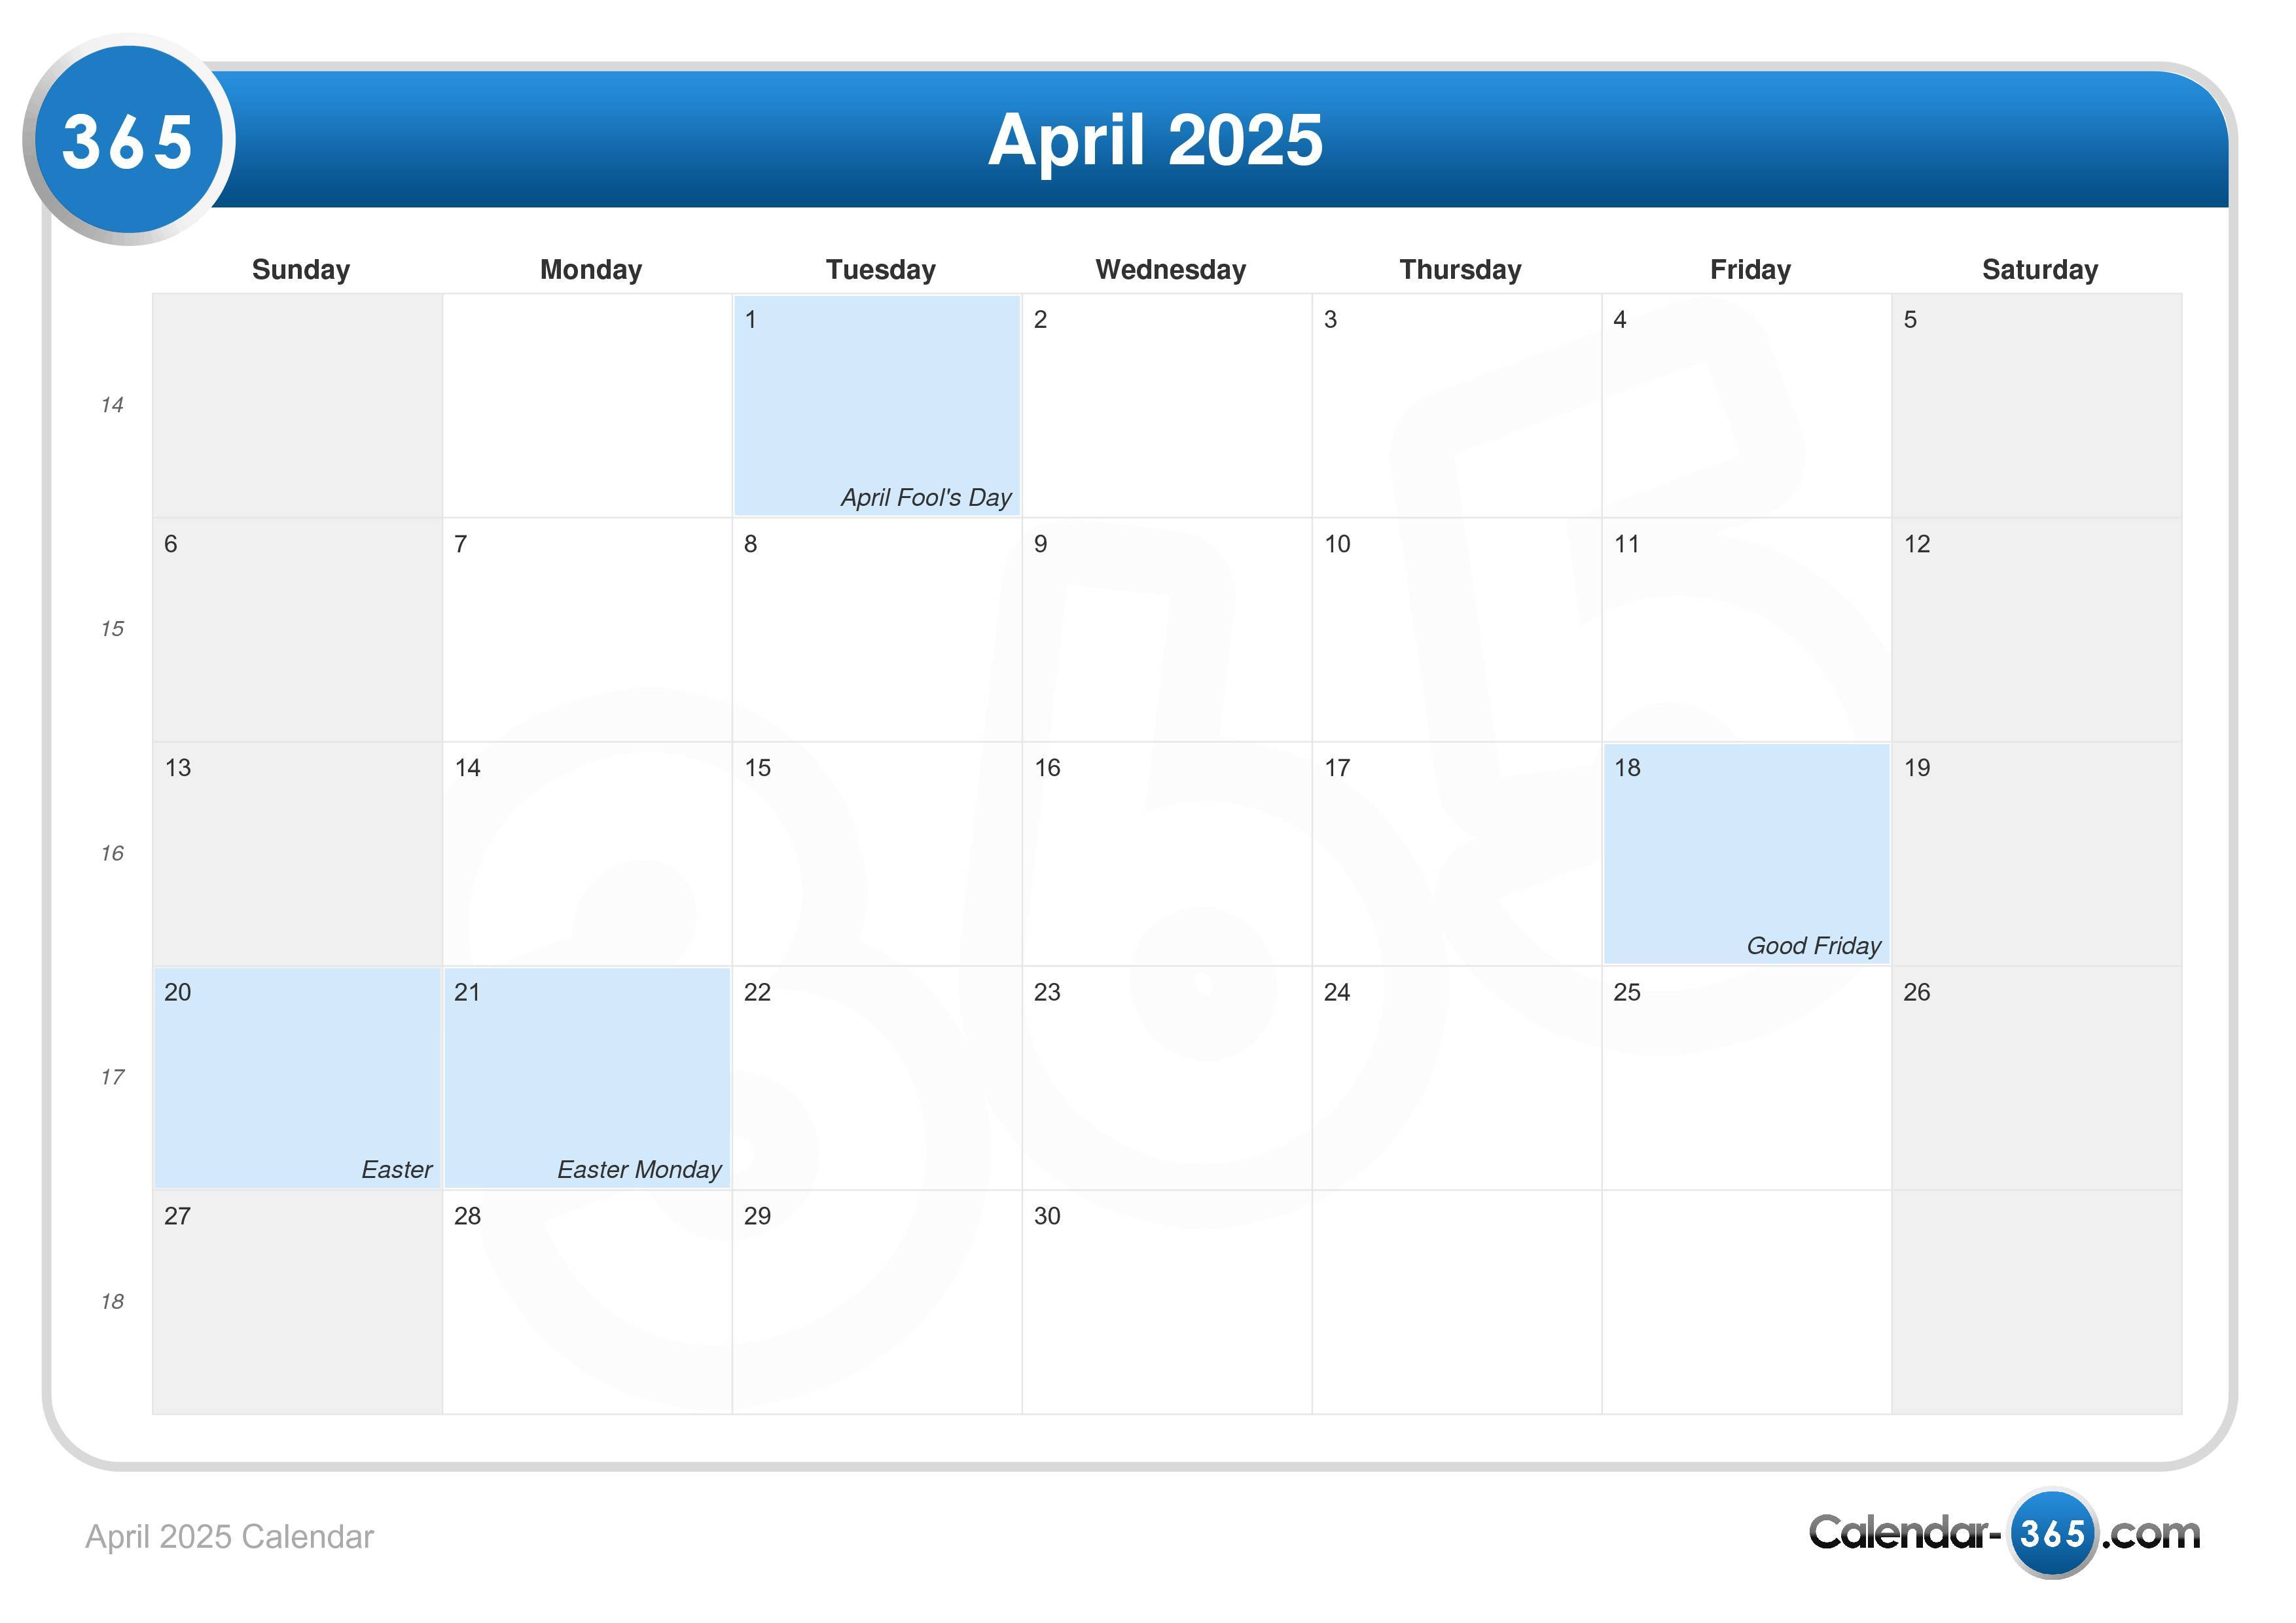 Easter Sunday 2025 Calendar Date tonya ferdinanda